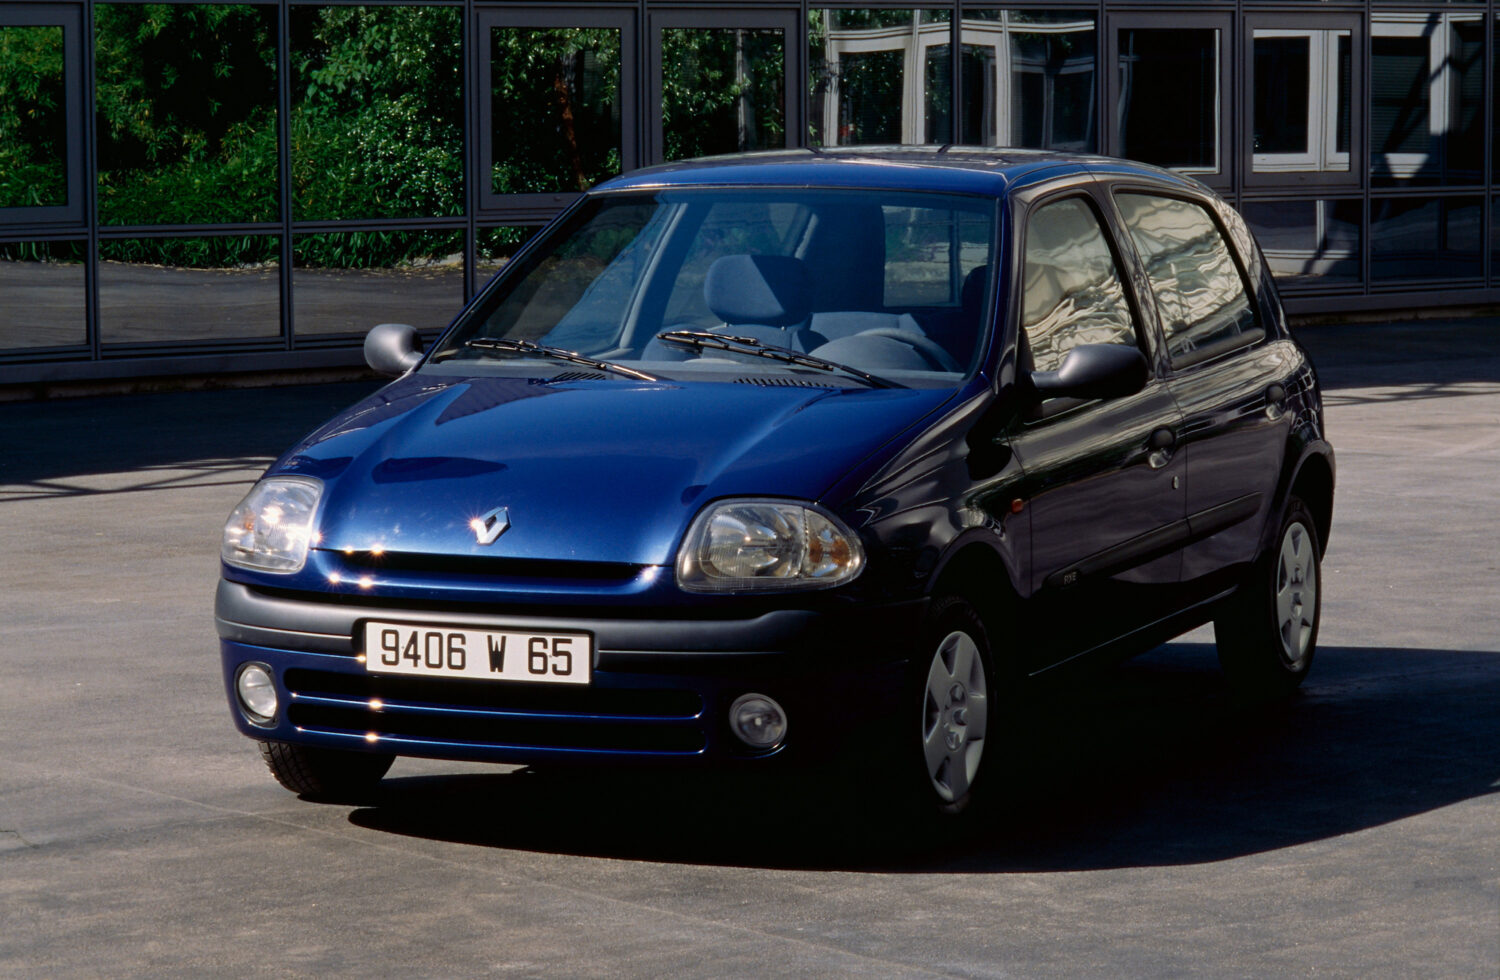 2020 - 30 ans de Renault CLIO - Renault CLIO 2 (1998-2005)